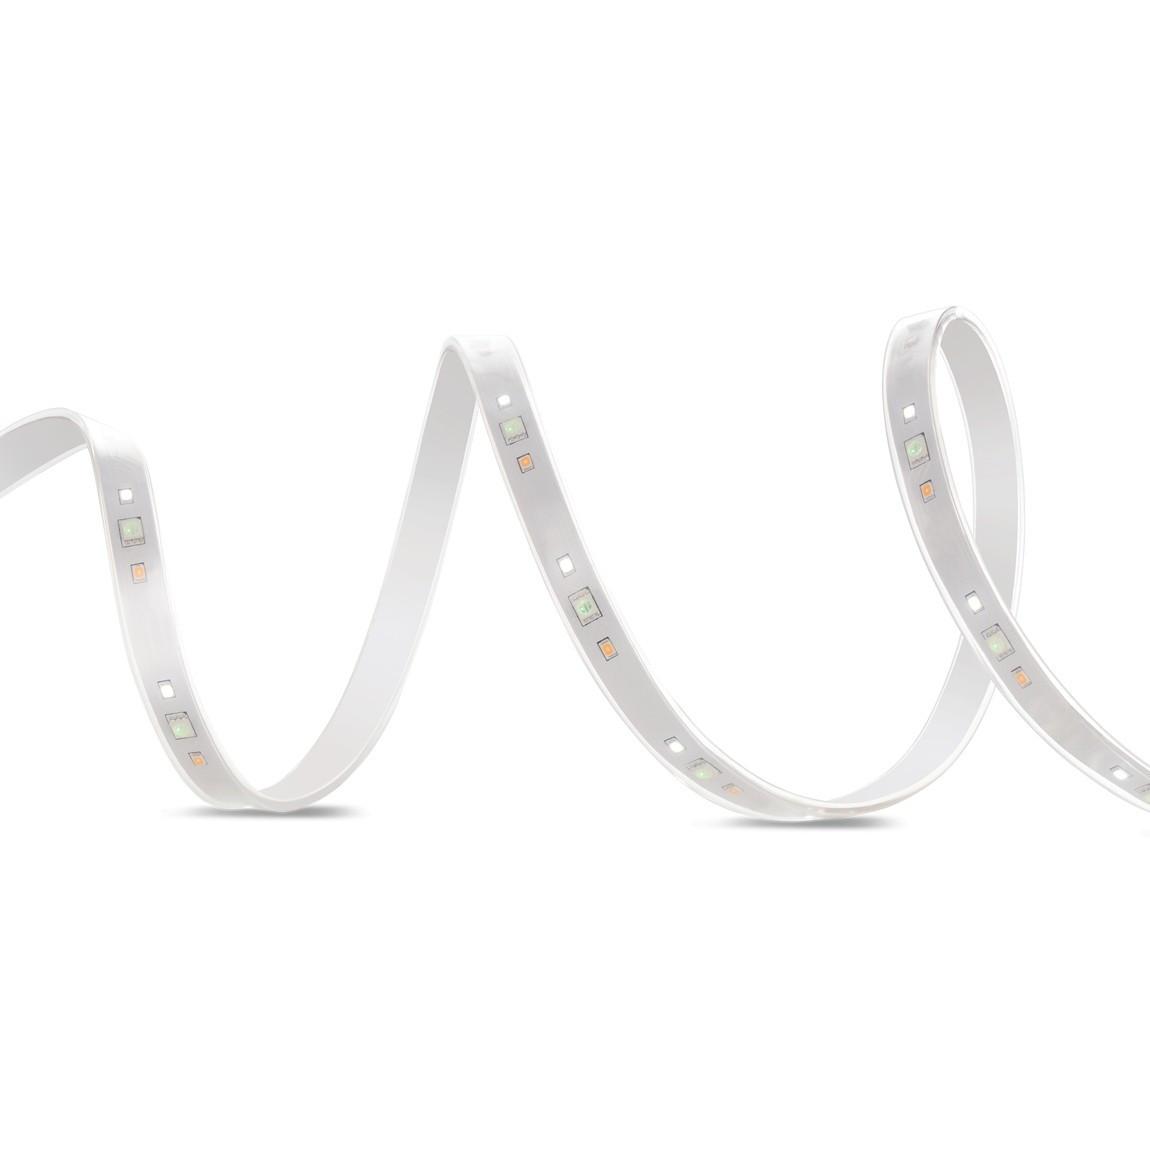 Eve Light Strip - LED Streifen ausgeschaltet